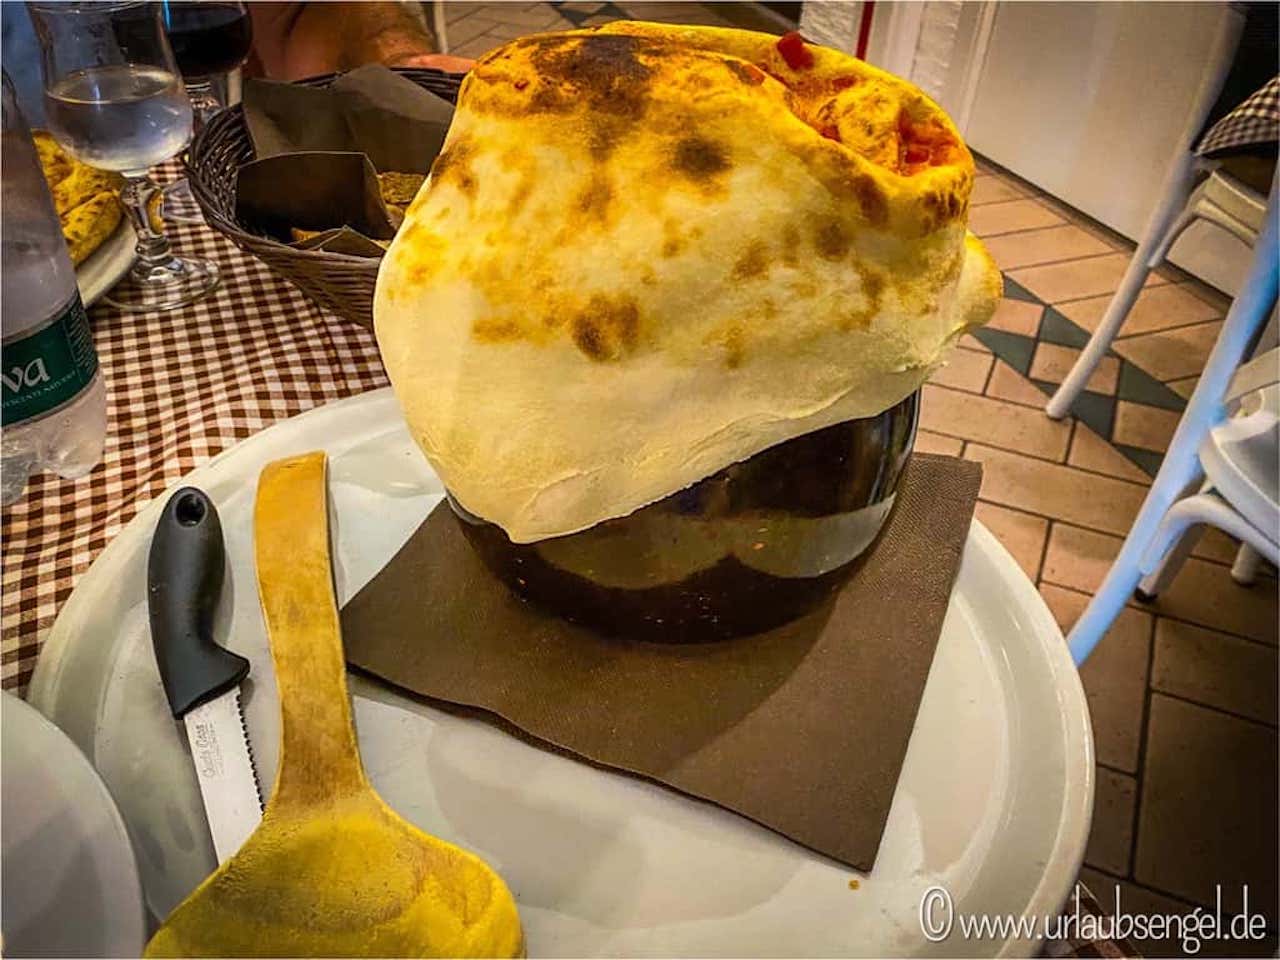 La Pignata: Eintopf in Terracotta mit Brot überbacken